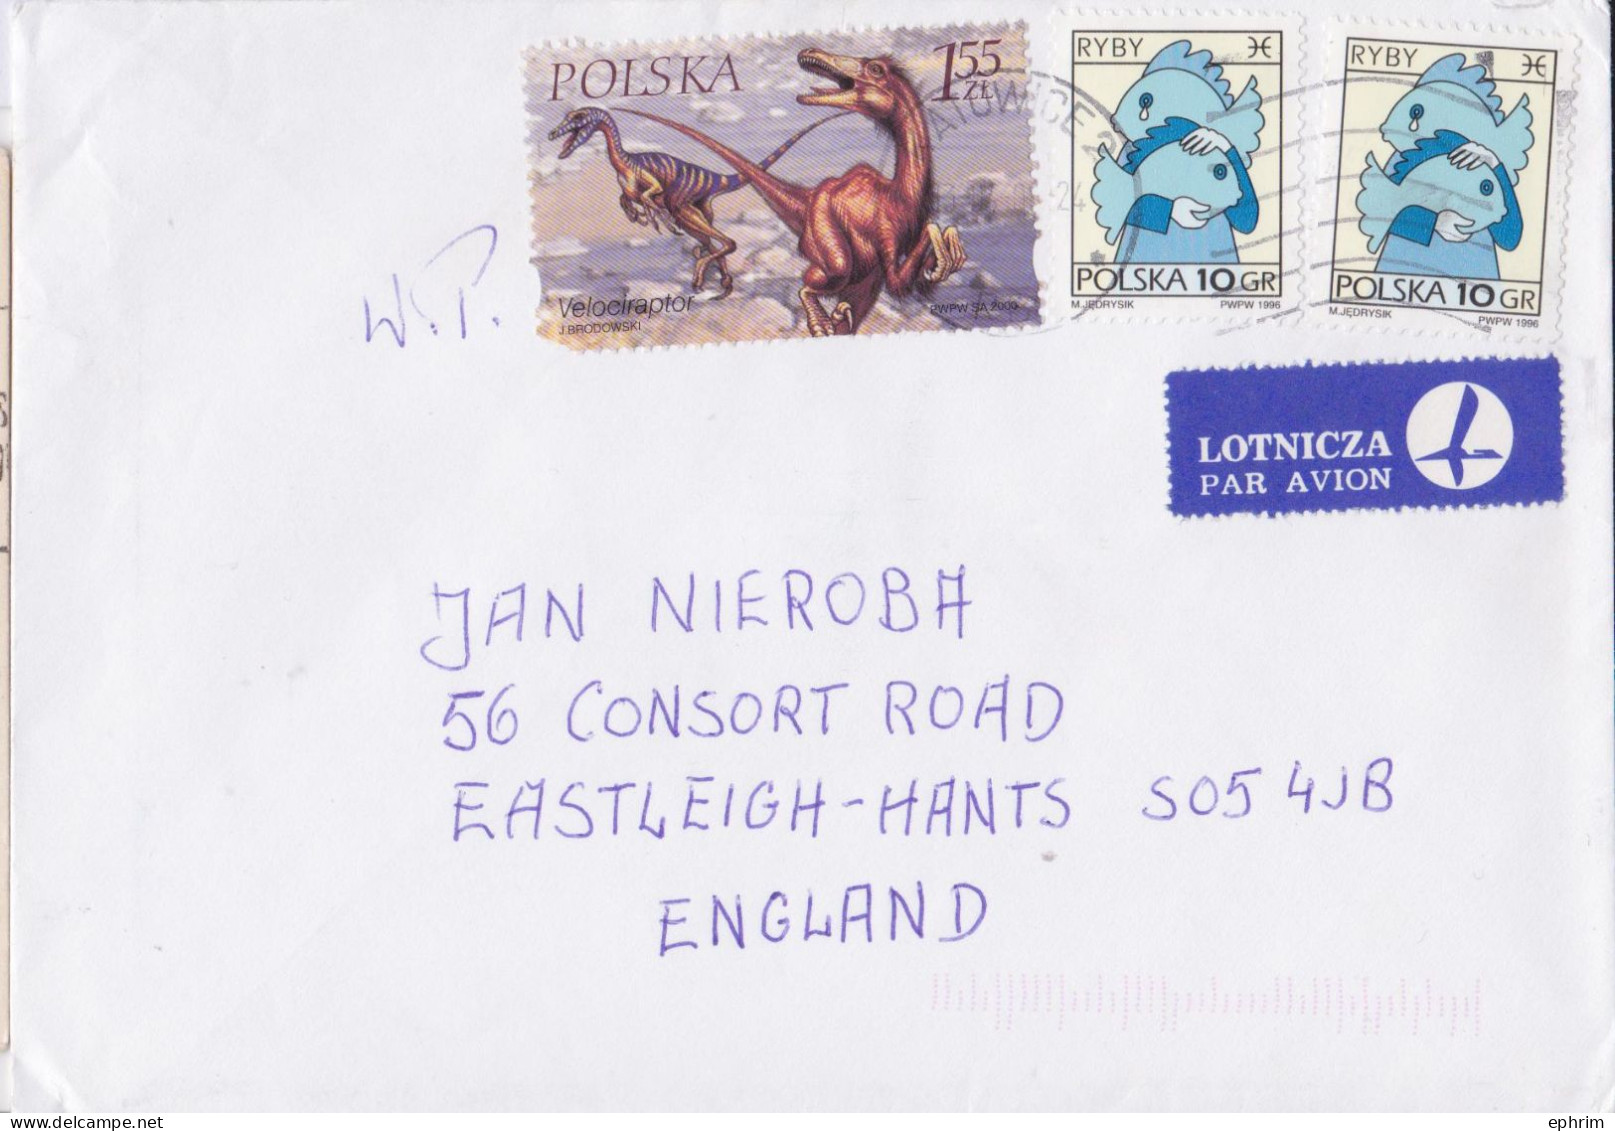 Pologne Poland Polska Katowice Lettre Timbre Dinosaure Velociraptor Dinosaur 2000 Stamp Air Mail Cover - Lettres & Documents